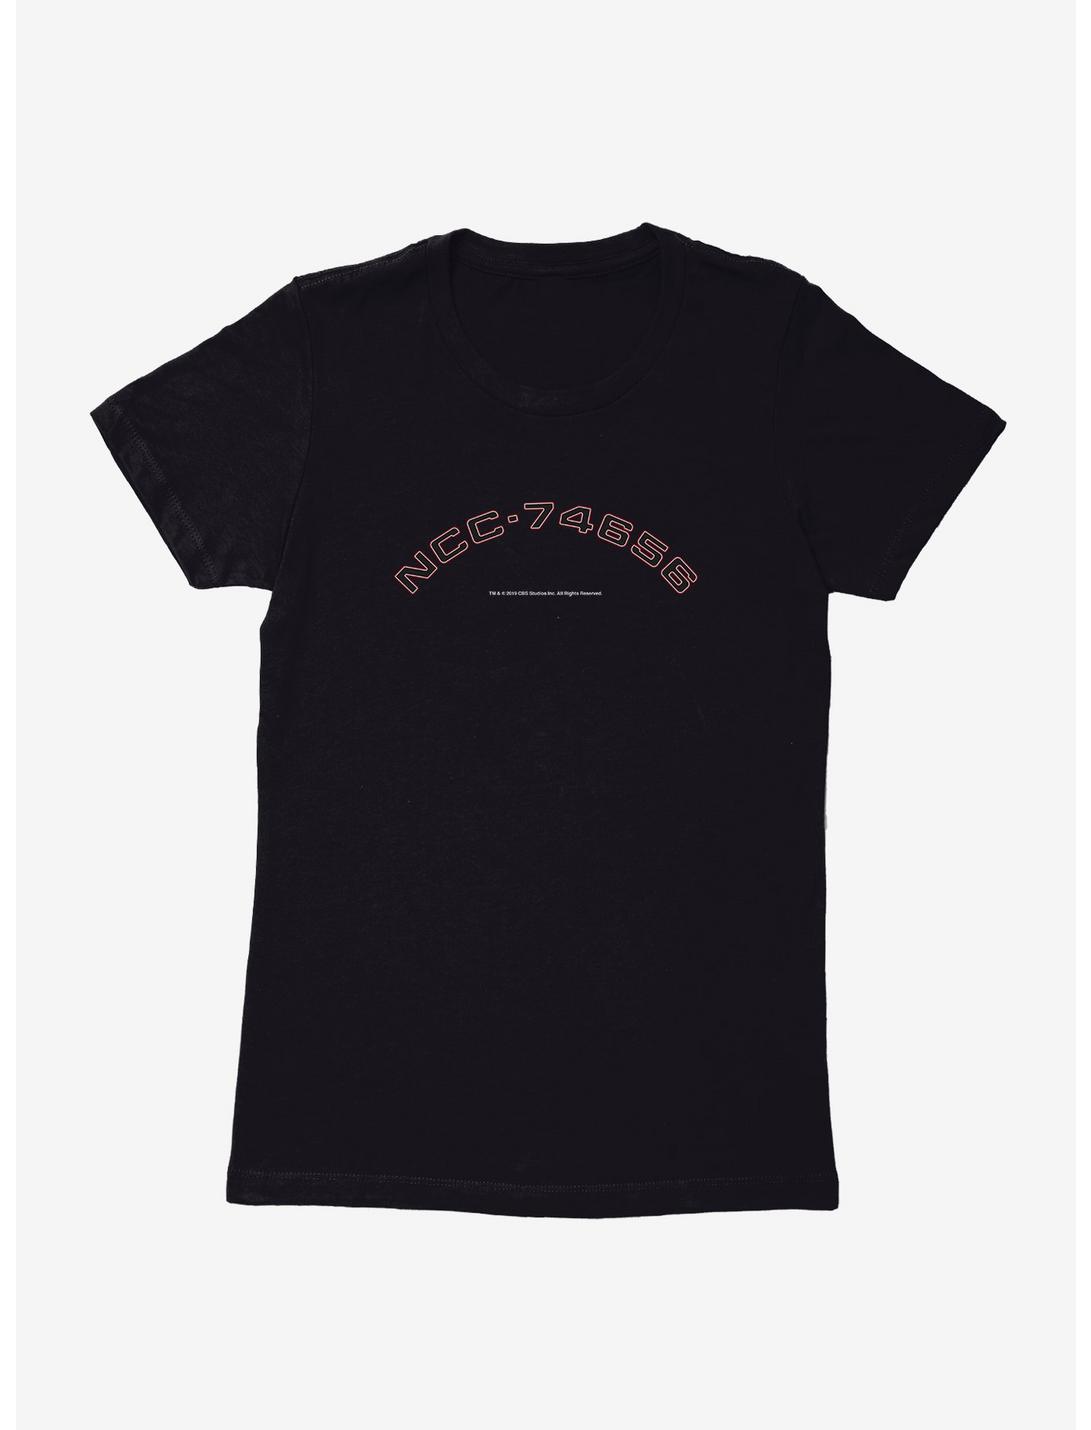 Star Trek N.C.C. 74656 Womens T-Shirt, , hi-res